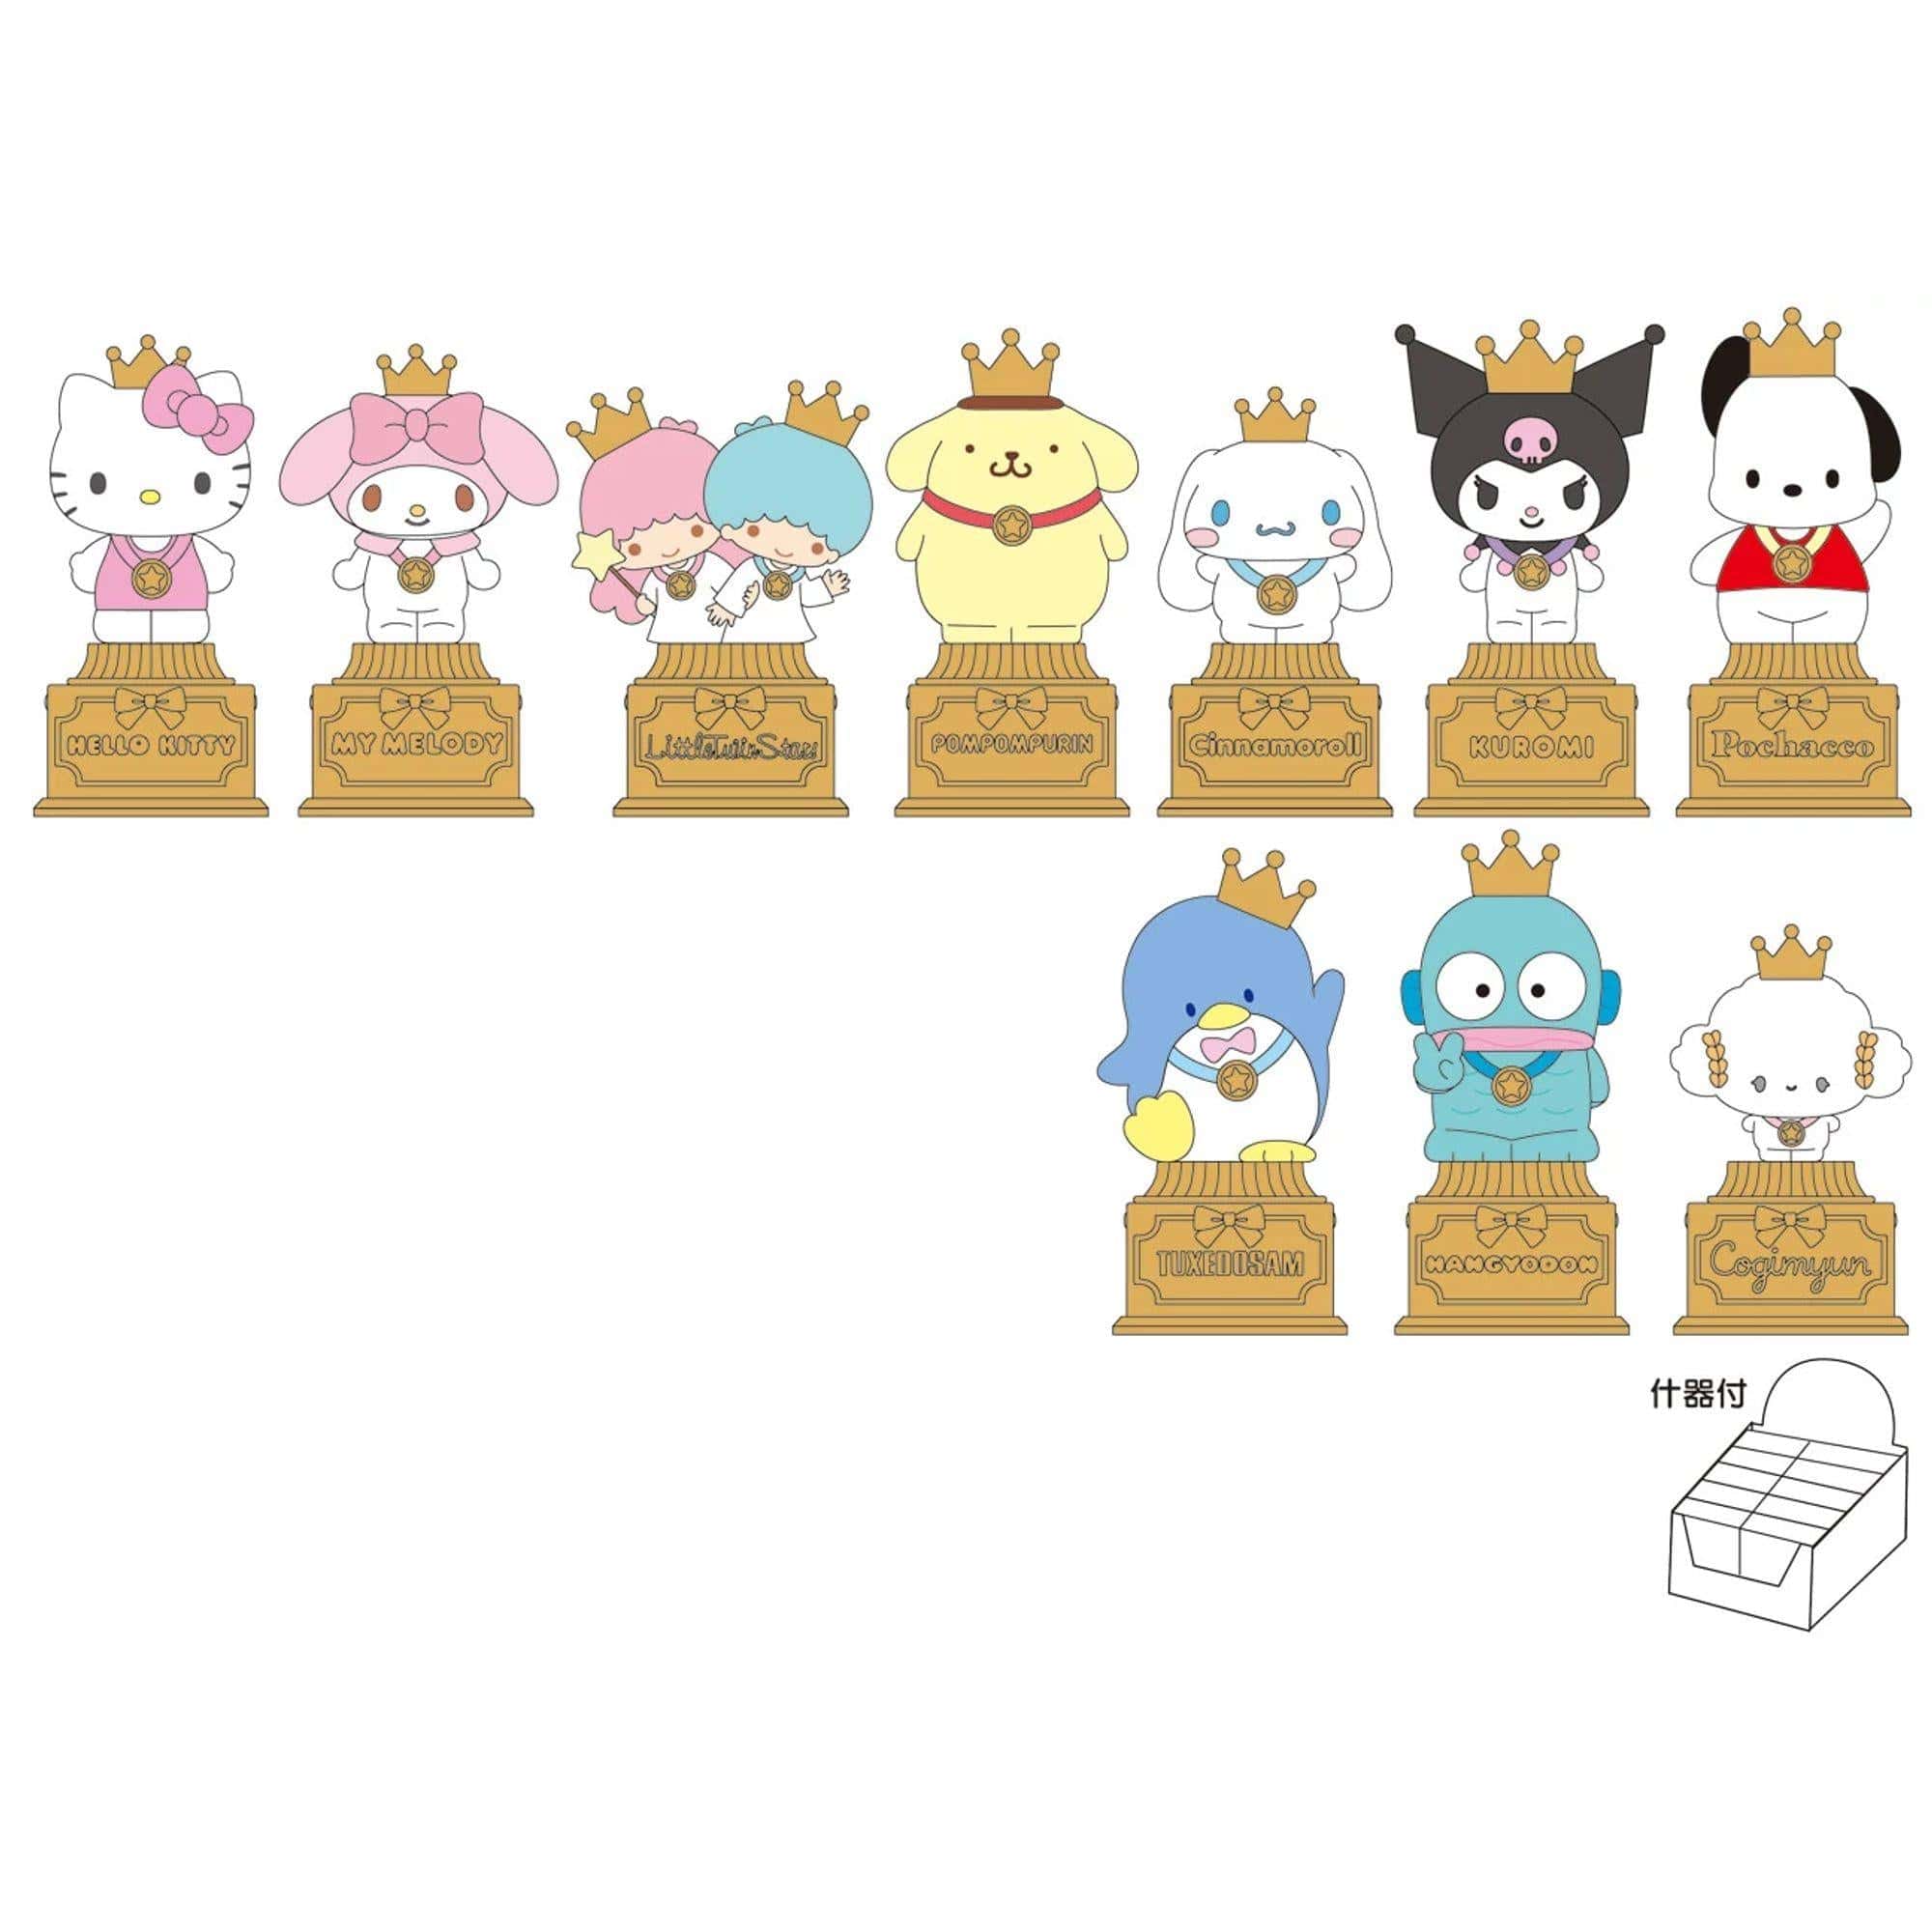 Enesco Sanrio Trophy Mini Figure Surprise Box Kawaii Gifts 4550337669129